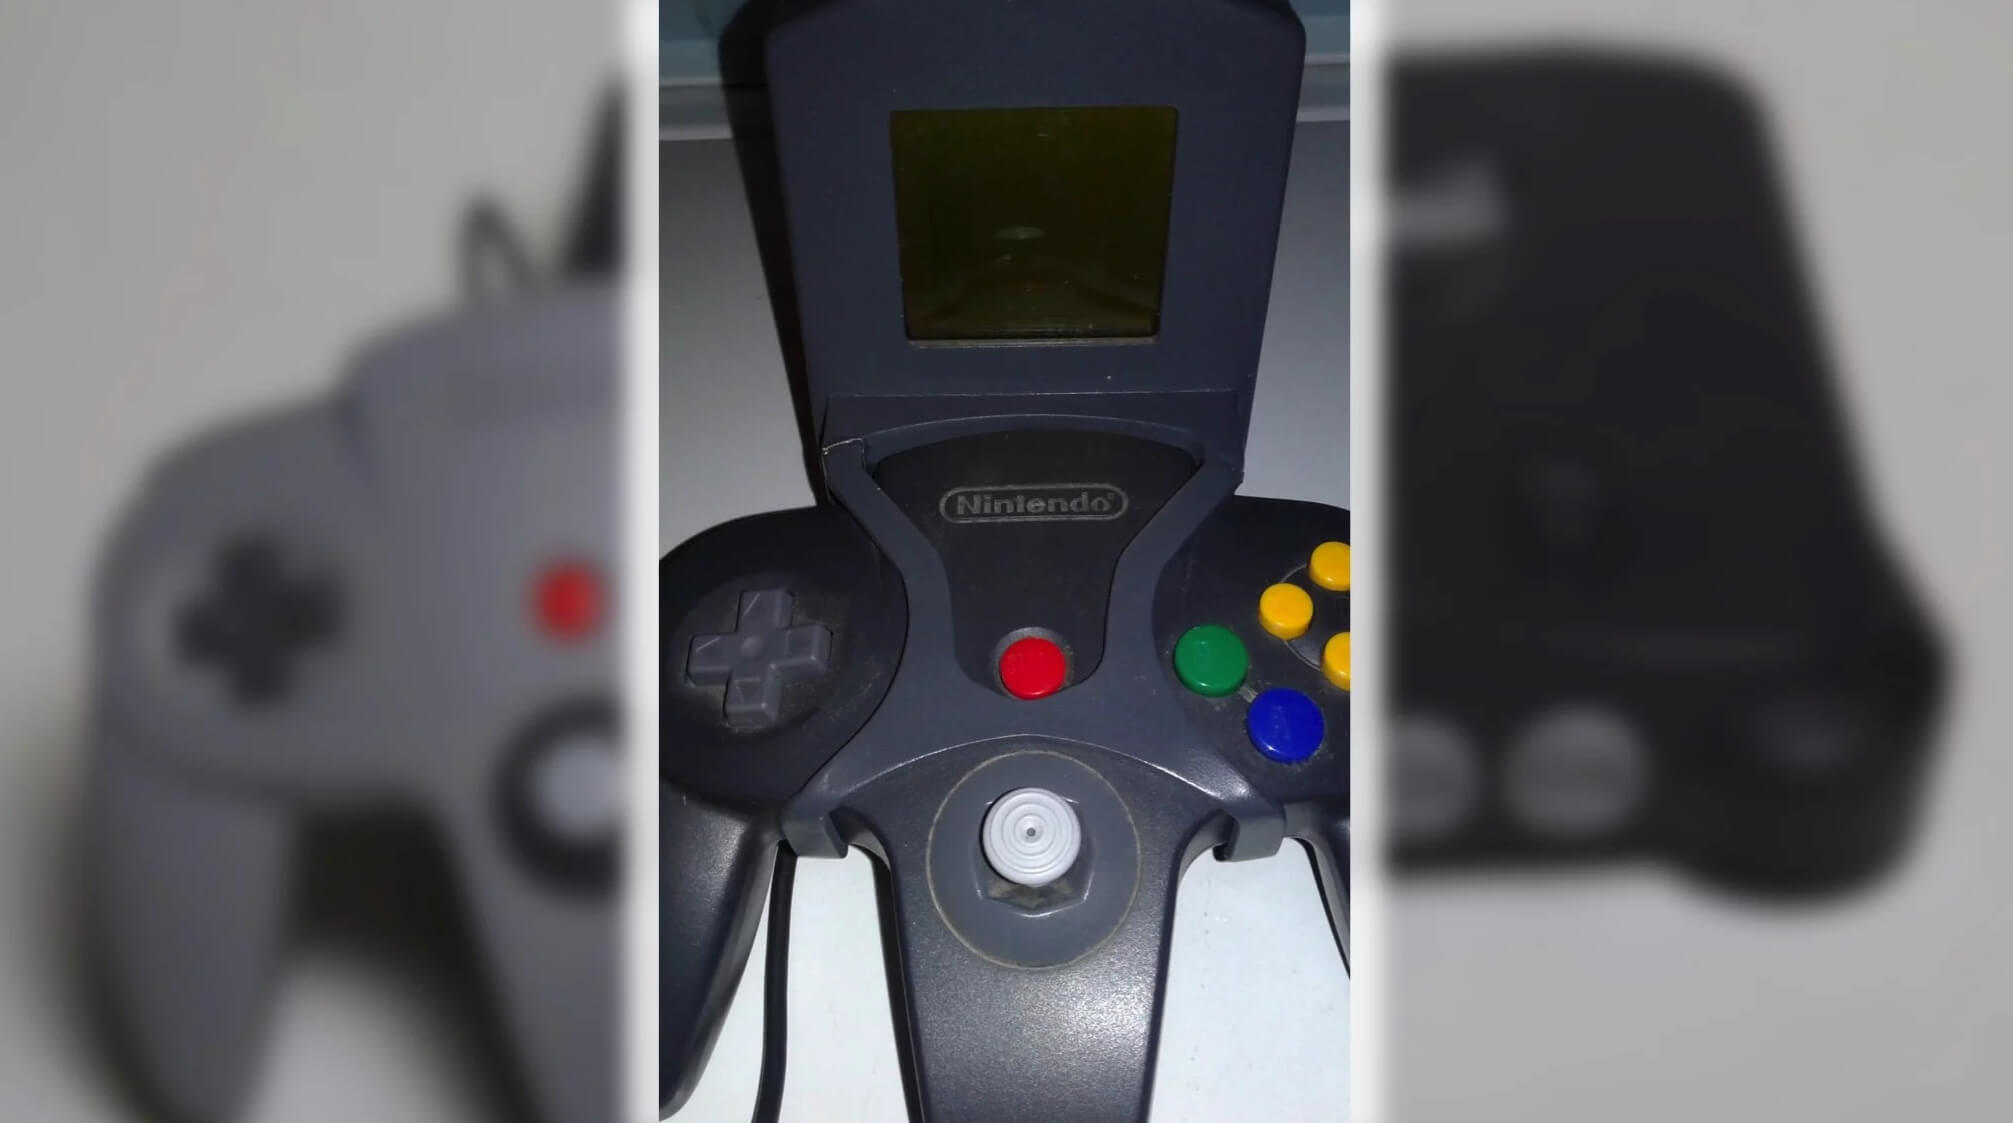 15 mistakes sega made - Helping Nintendo Create the N64